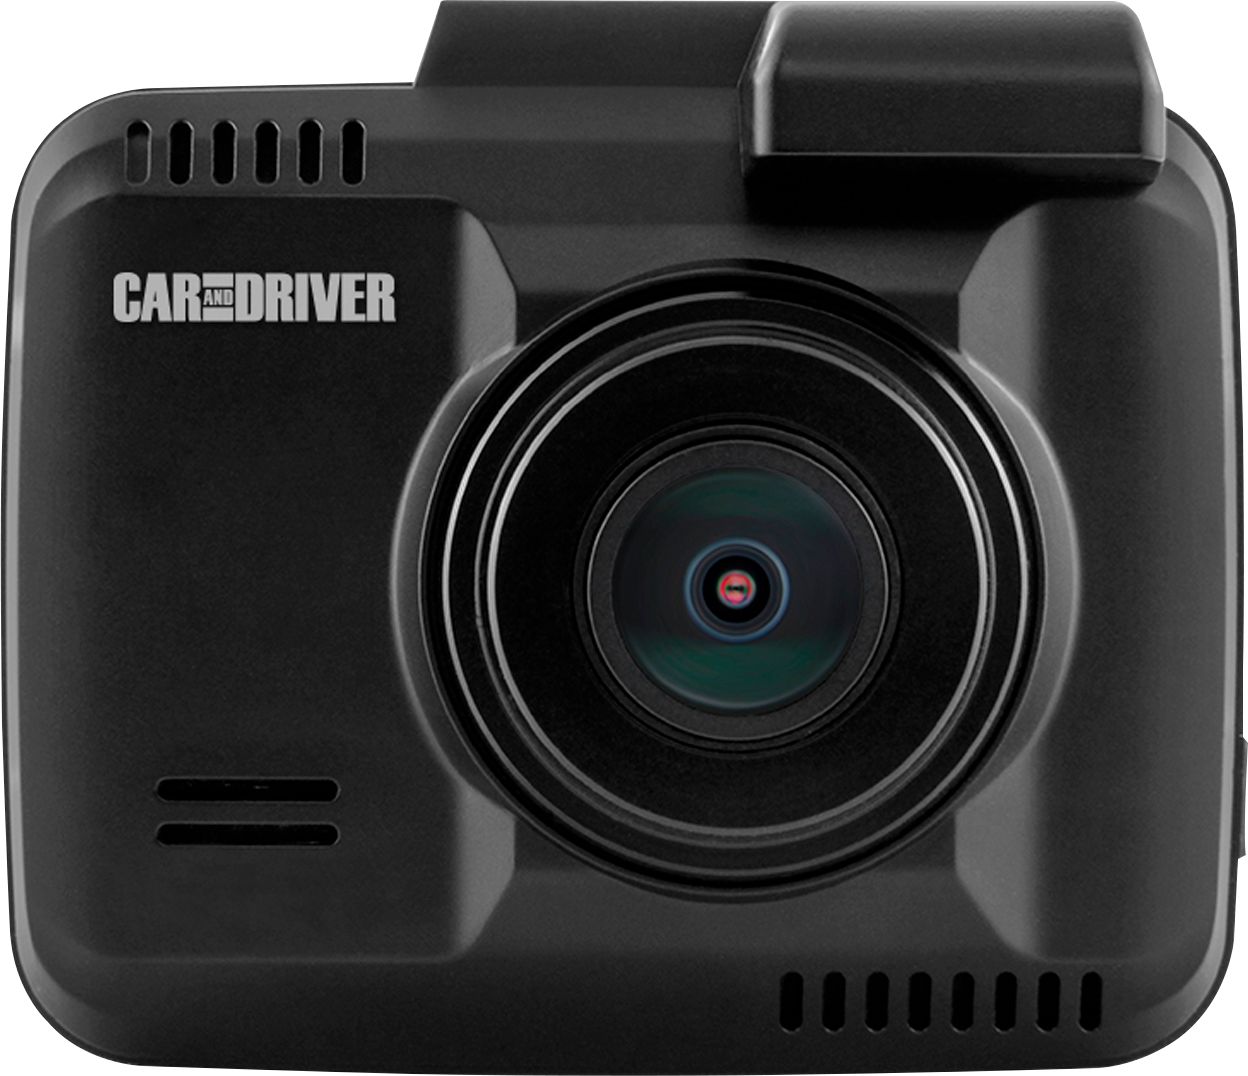 Eyelog Super HD 1296P Wide Angle Car DVR Dash Camera System